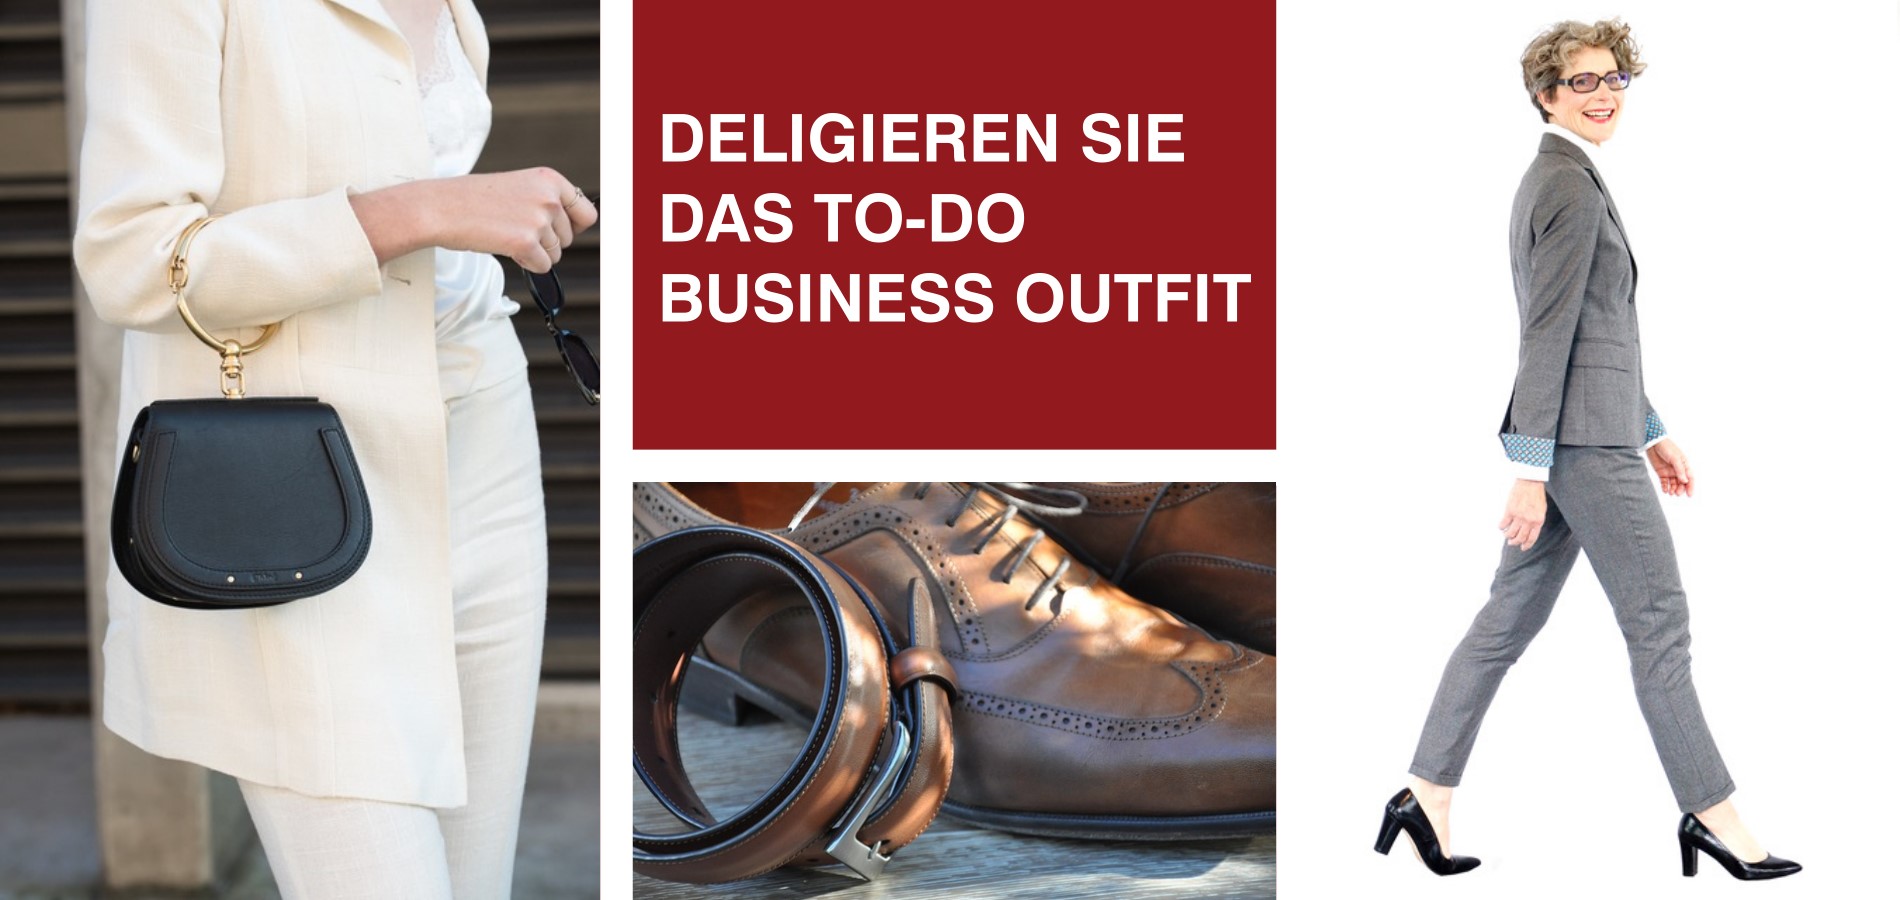 Deligieren Sie das To-Do Business Outfit